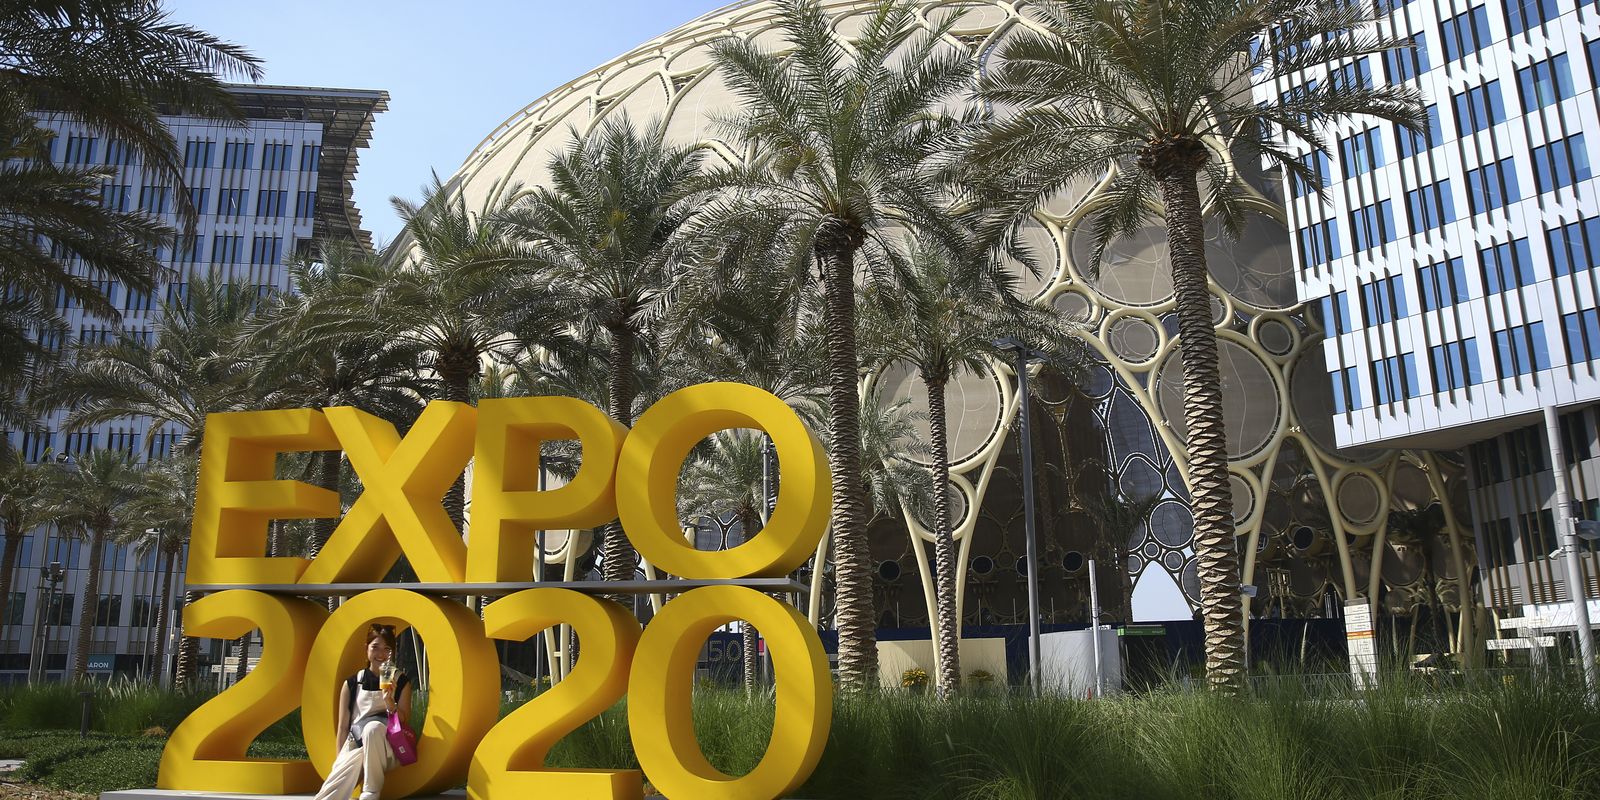 Sob forte calor, Expo Dubai começa a receber visitantes nesta sexta